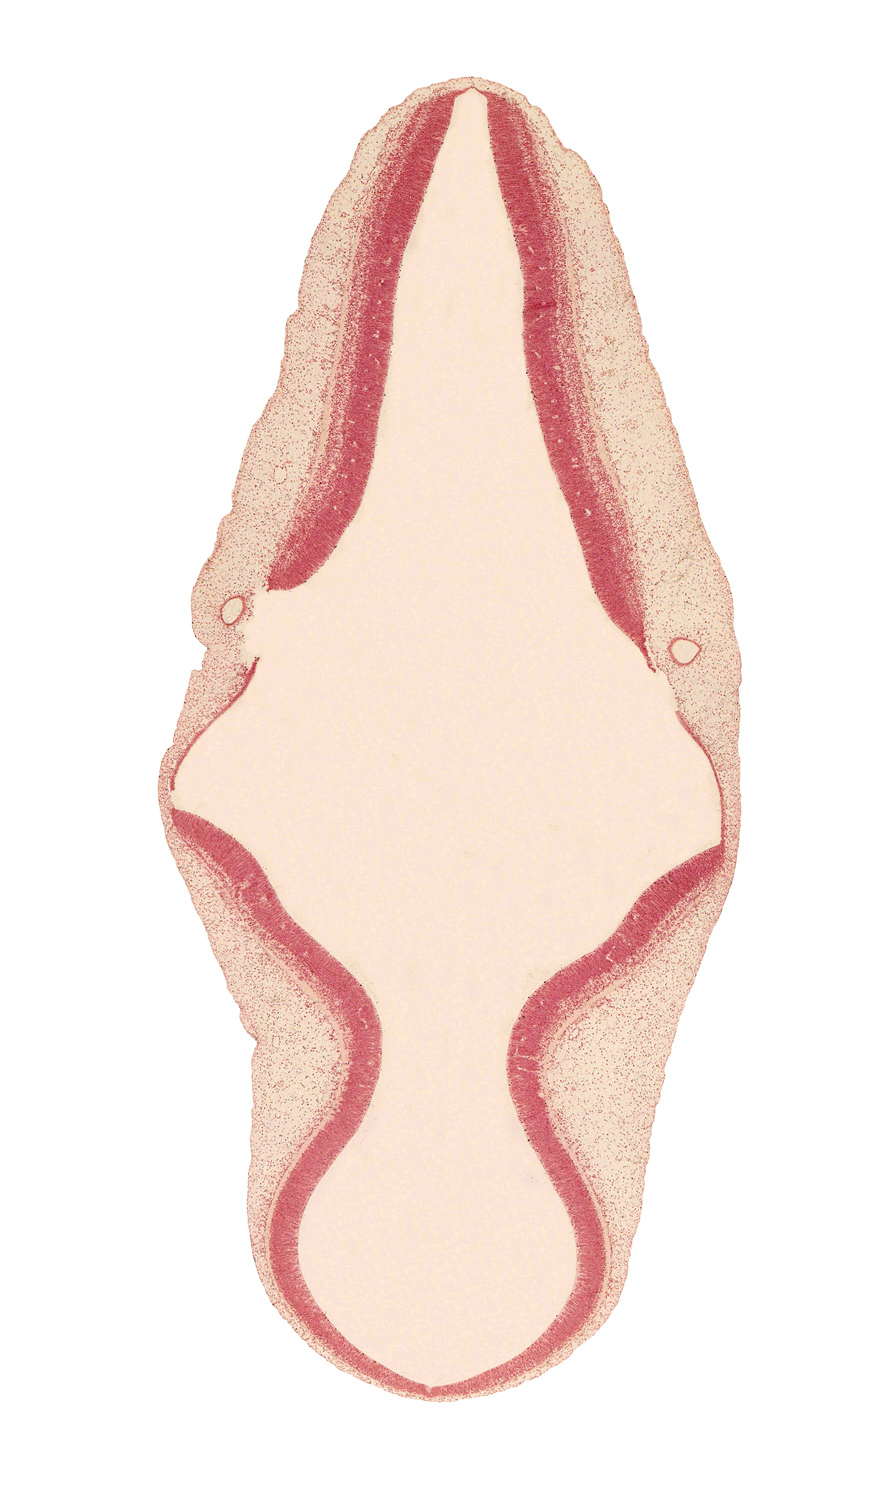 alar plate(s), artifact separation(s), head mesenchyme, isthmus of rhombencephalon, mesencephalon (M2), metencephalon, myelencephalon, roof plate, sulcus limitans, surface ectoderm, trochlear nerve (CN IV)